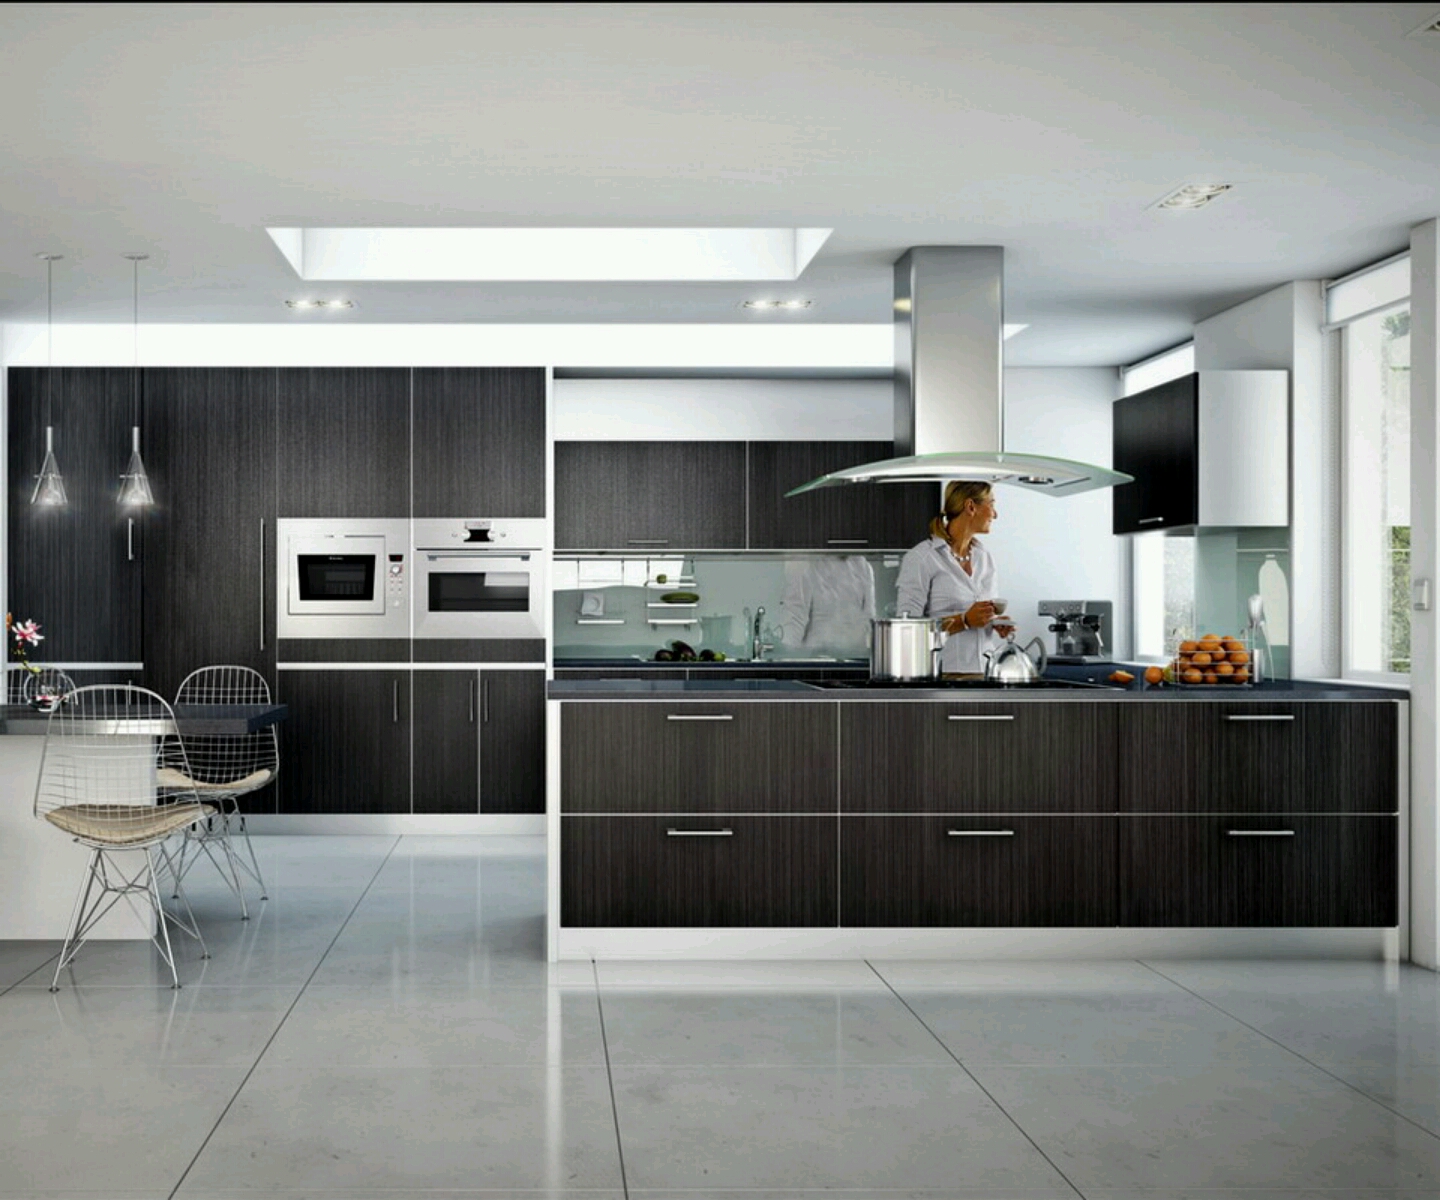 New home designs latest. Modern homes ultra modern